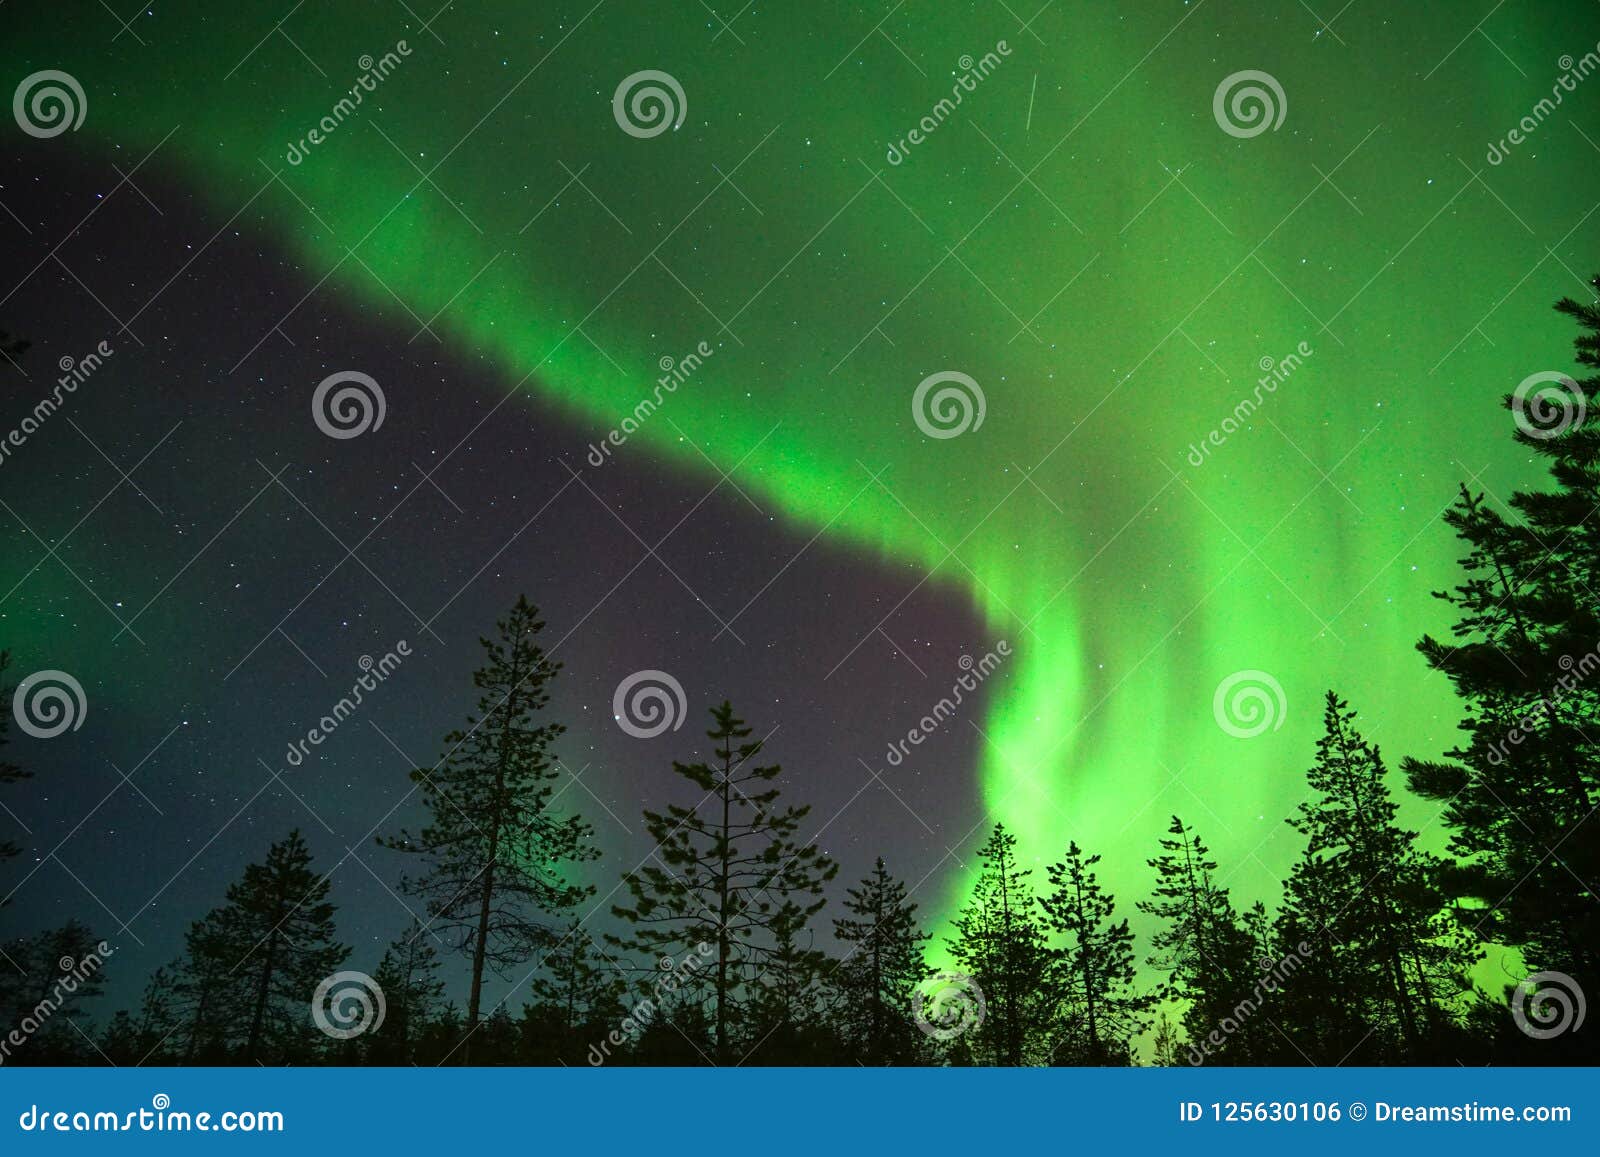 green aurora borealis in lapland, finland